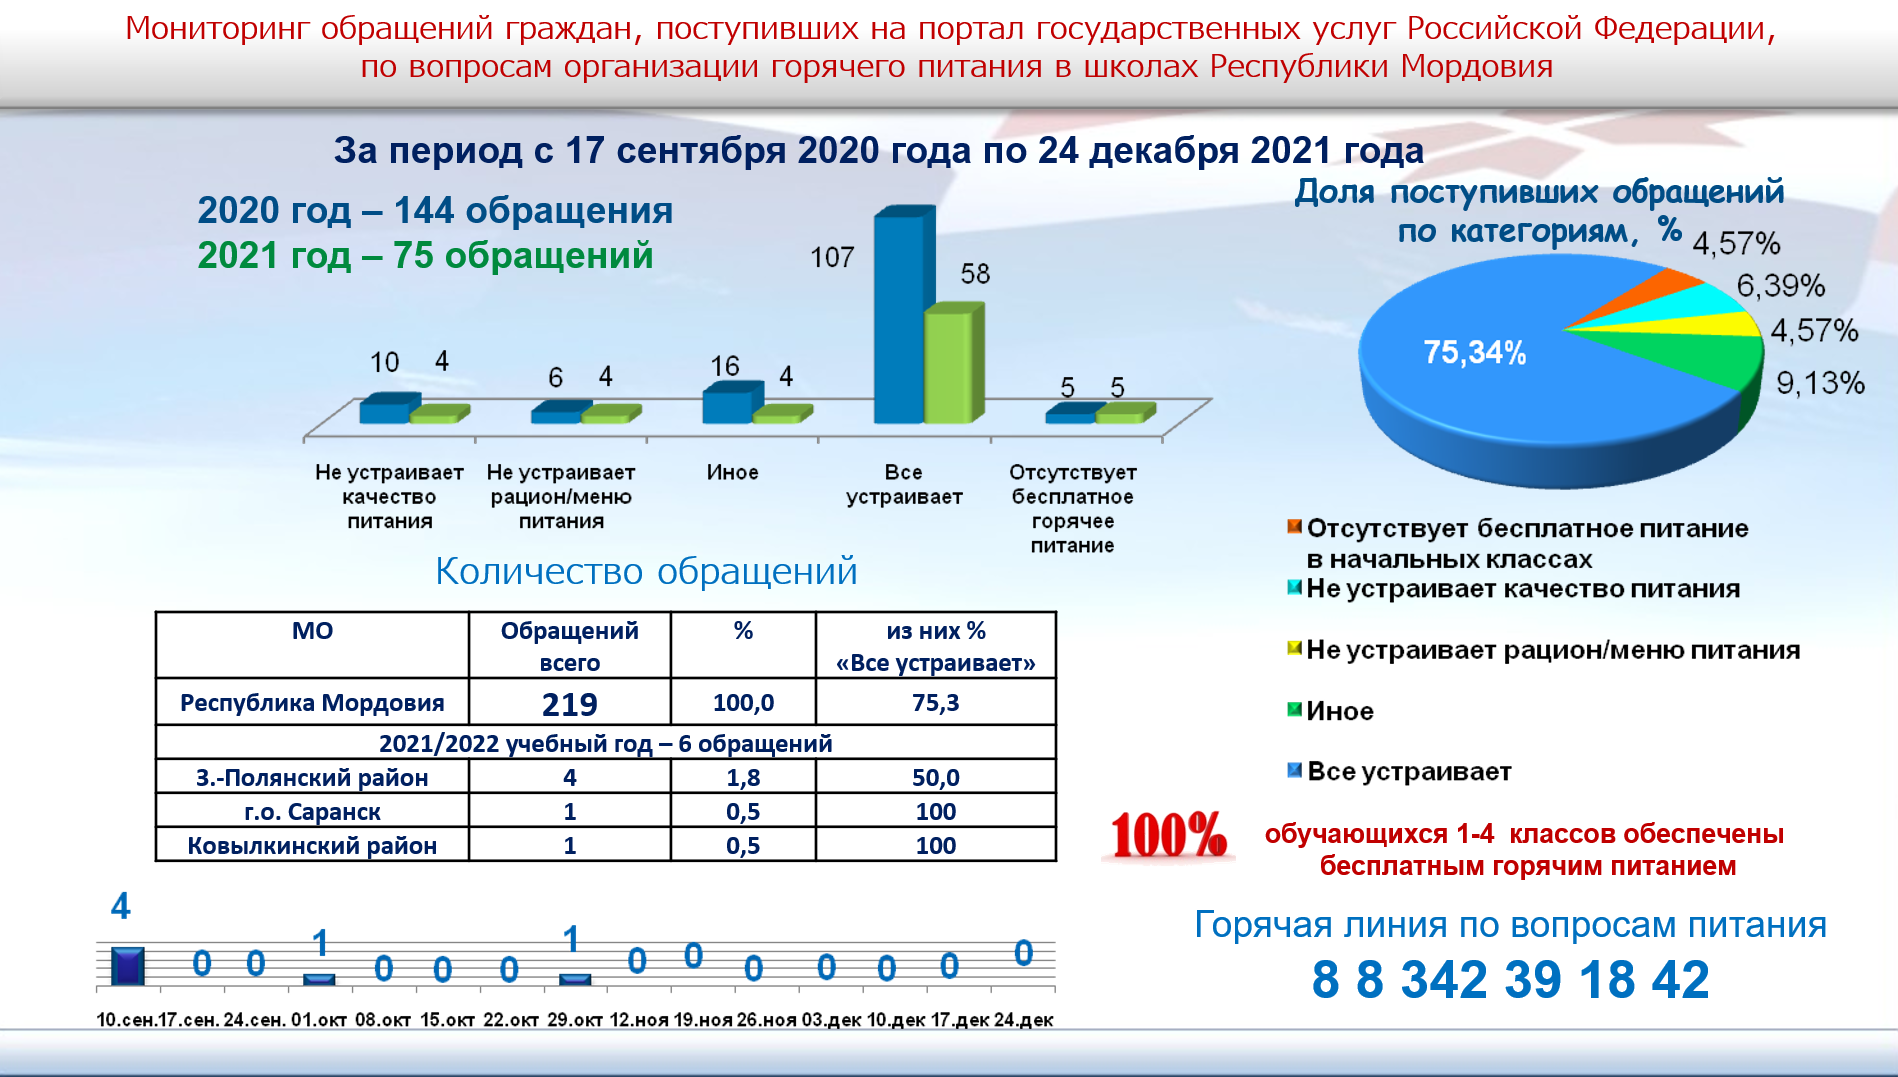 Сайт 2020 рф. Мониторинг в образовании Республика Молдова 2020.